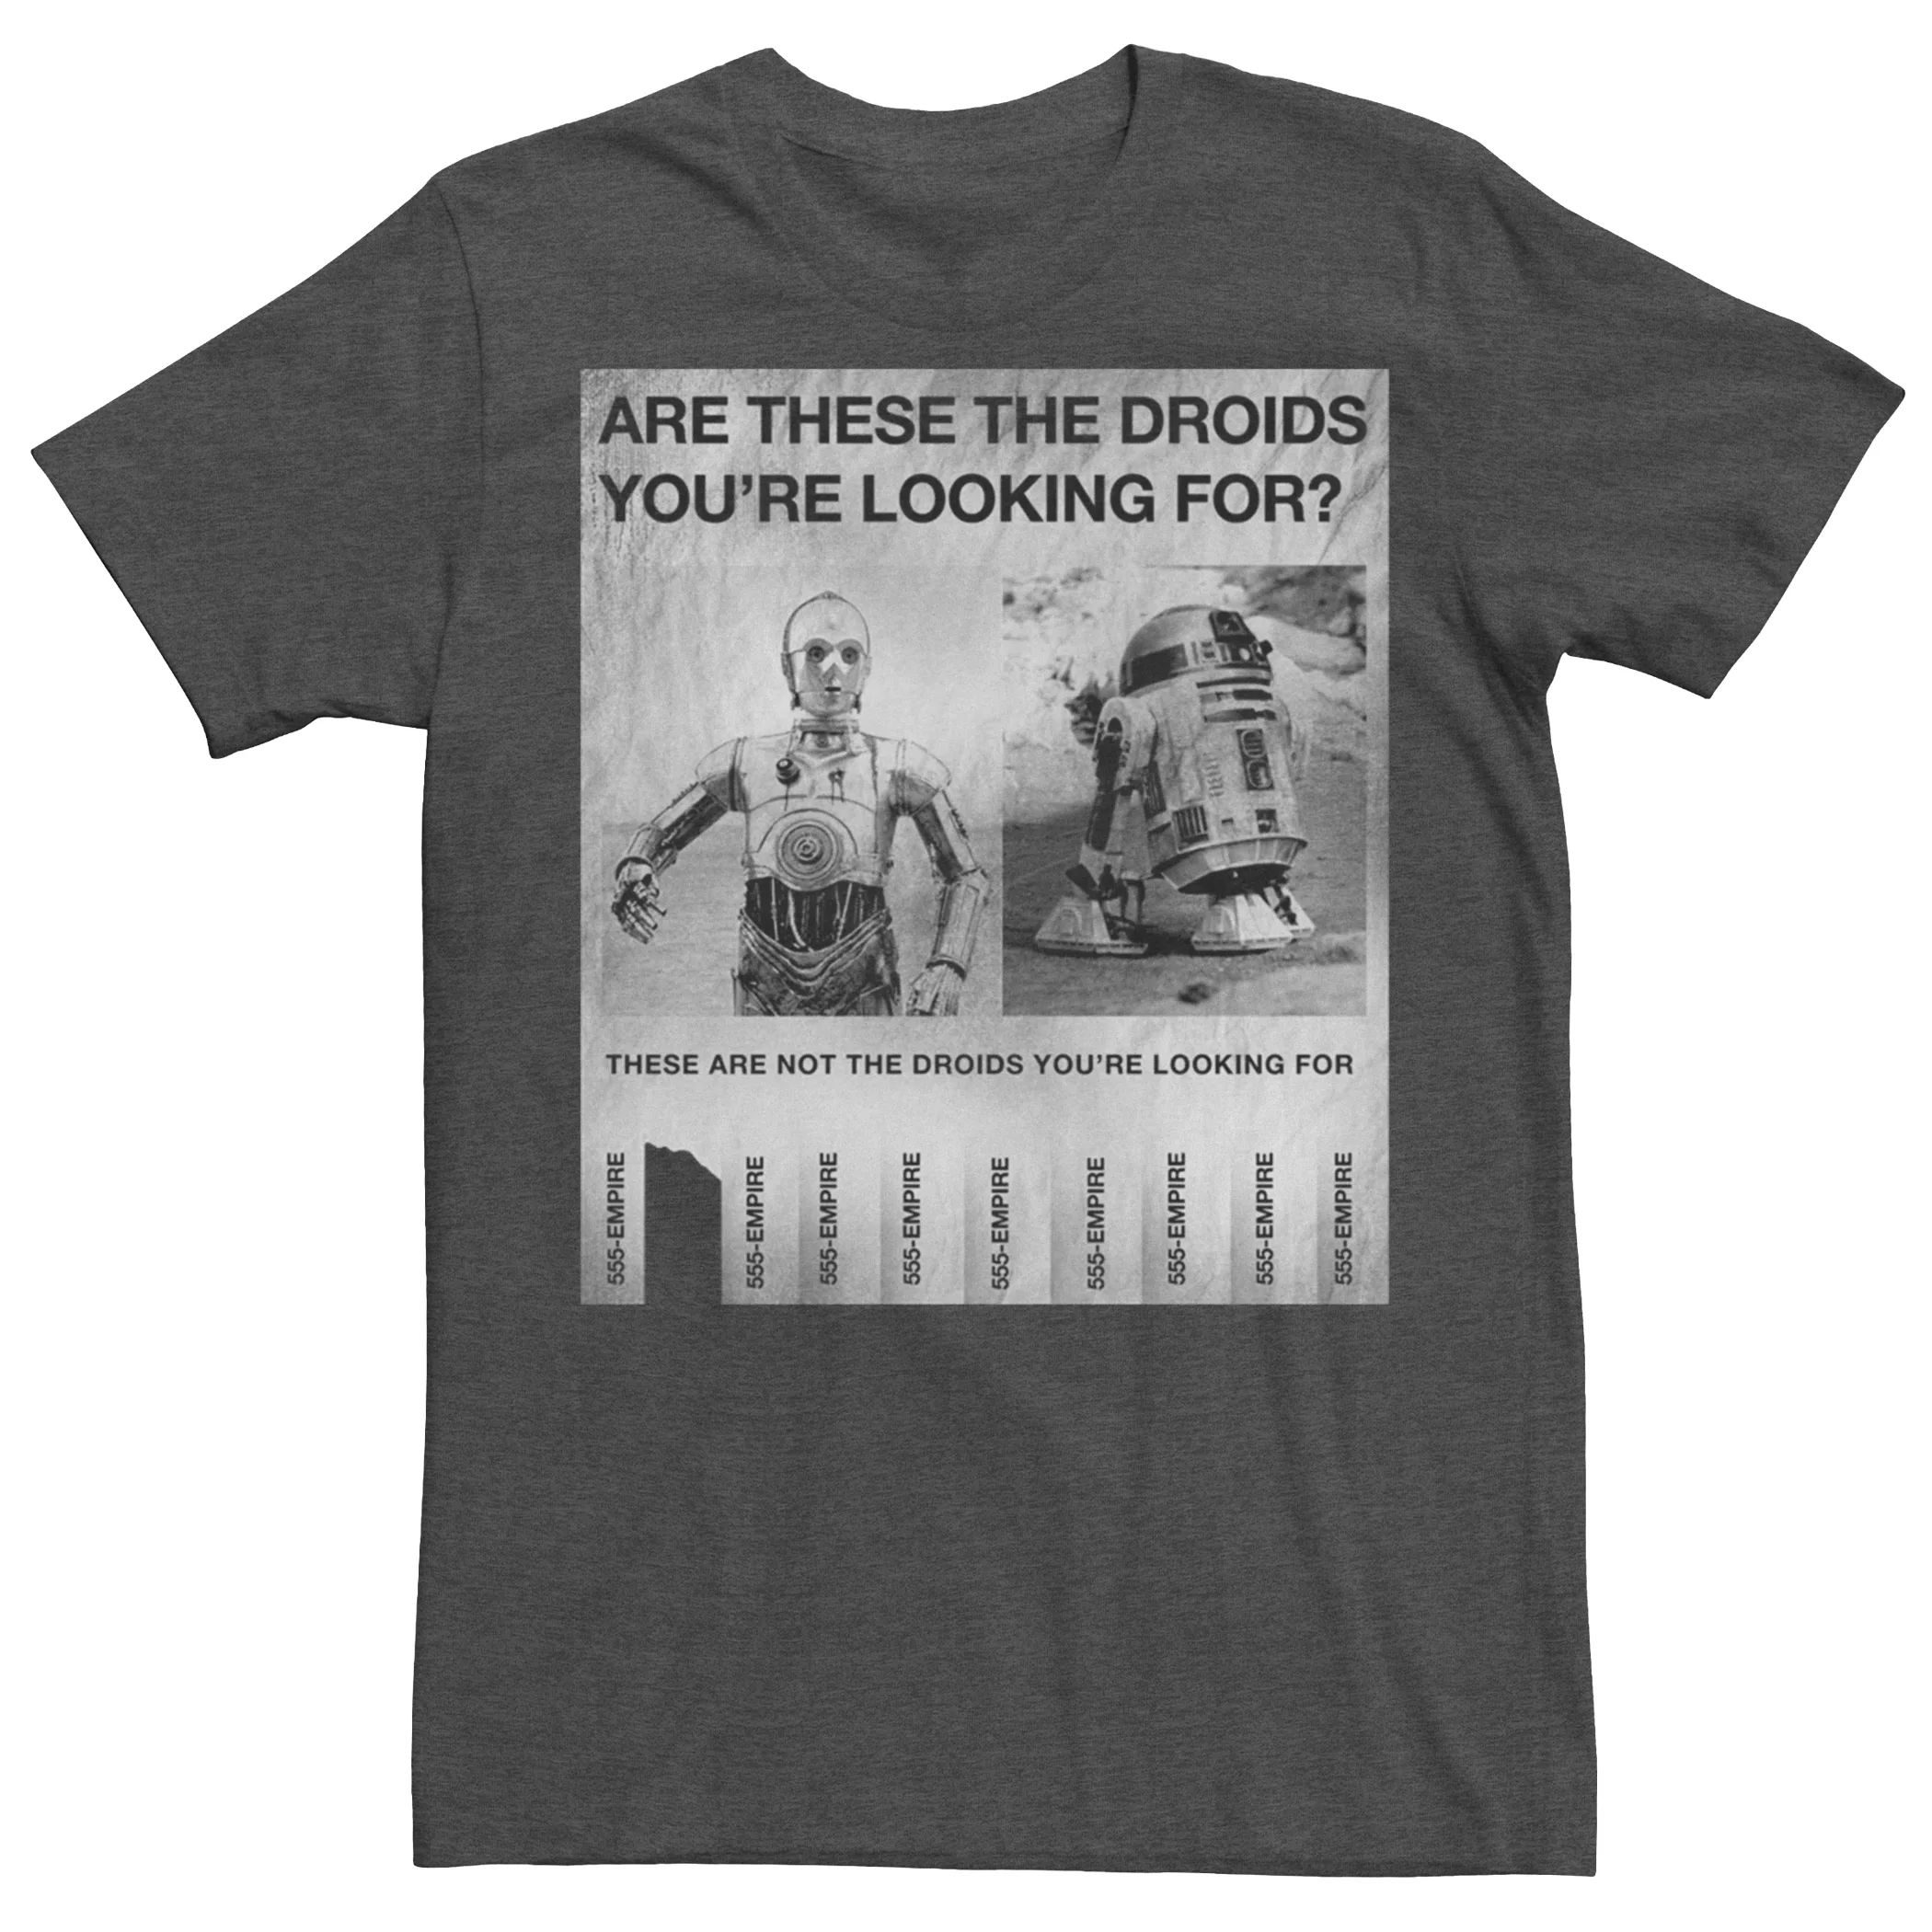 Мужская футболка с плакатом «Звездные войны: Дроид» Licensed Character